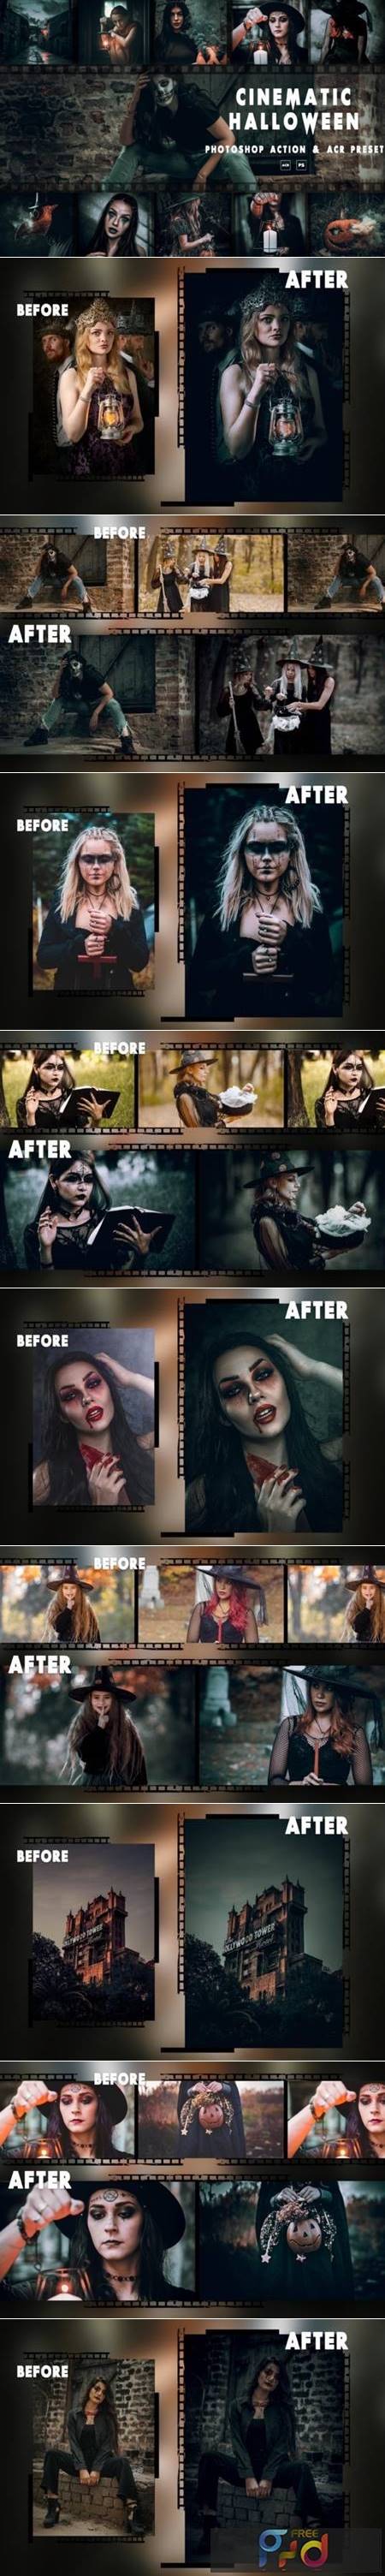 10 Cinematic Halloween Photoshop Actions 37809815 1